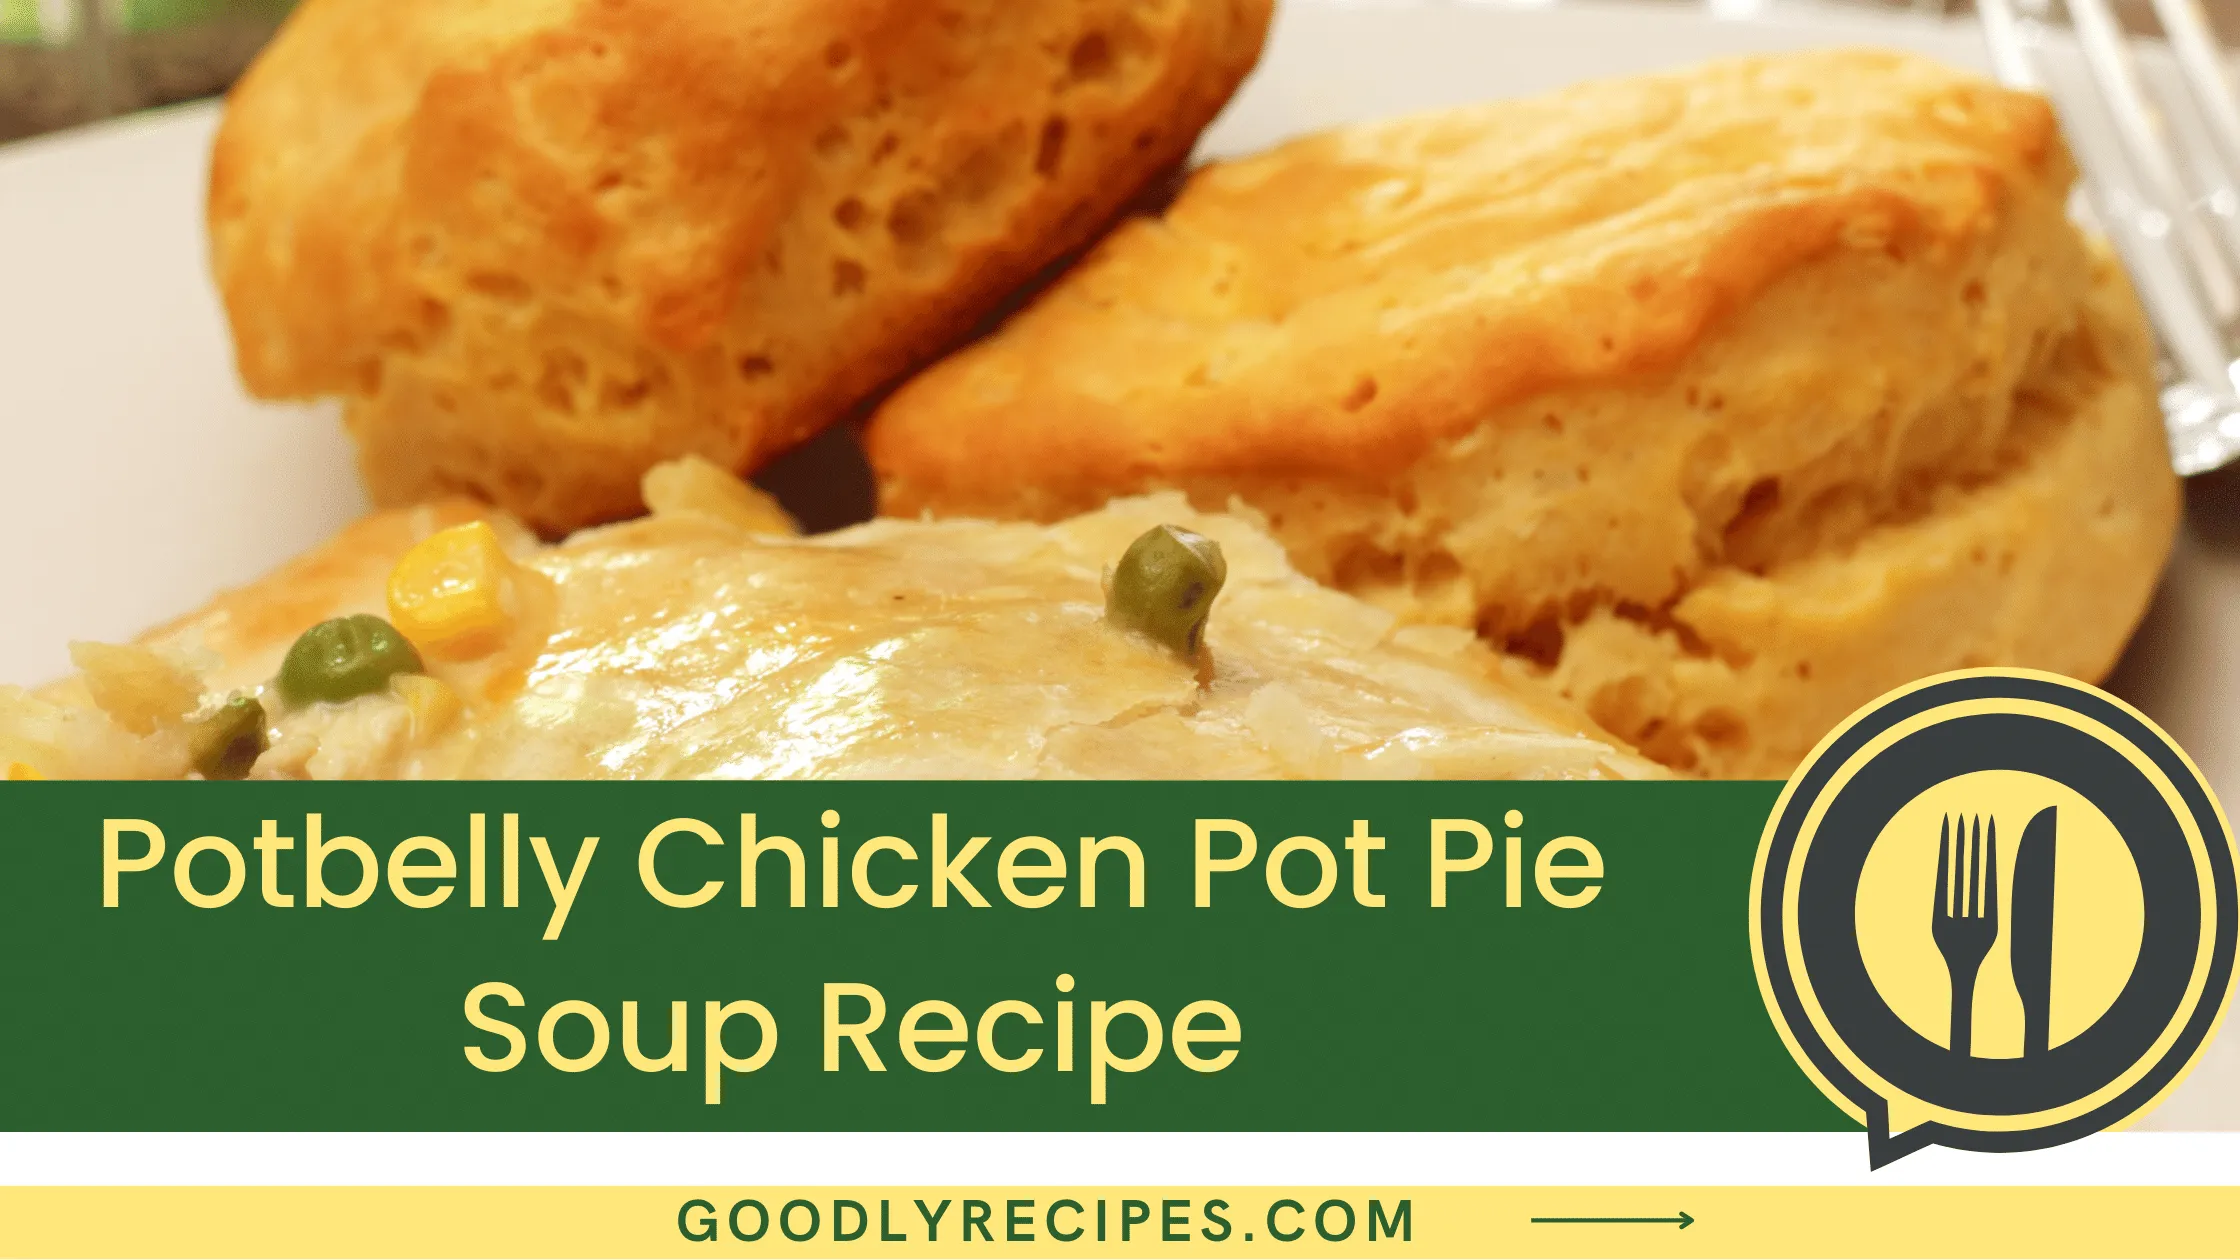 Potbelly Chicken Pot Pie Soup Recipe